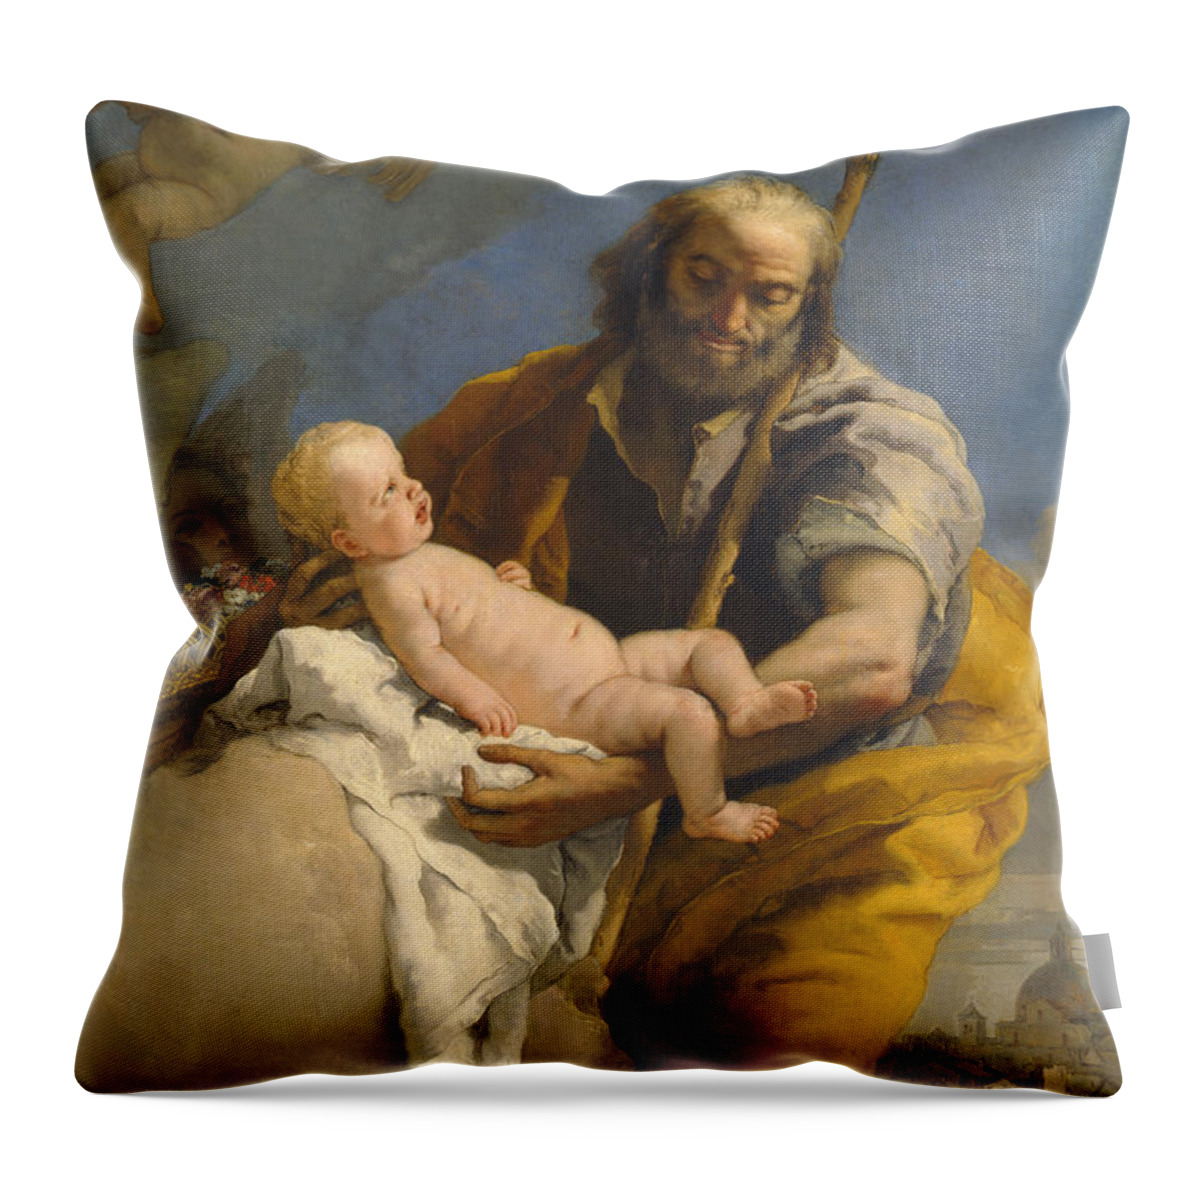 Saint Joseph And The Christ Child Throw Pillow featuring the painting Saint Joseph and the Christ Child by Giovanni Battista Tiepolo